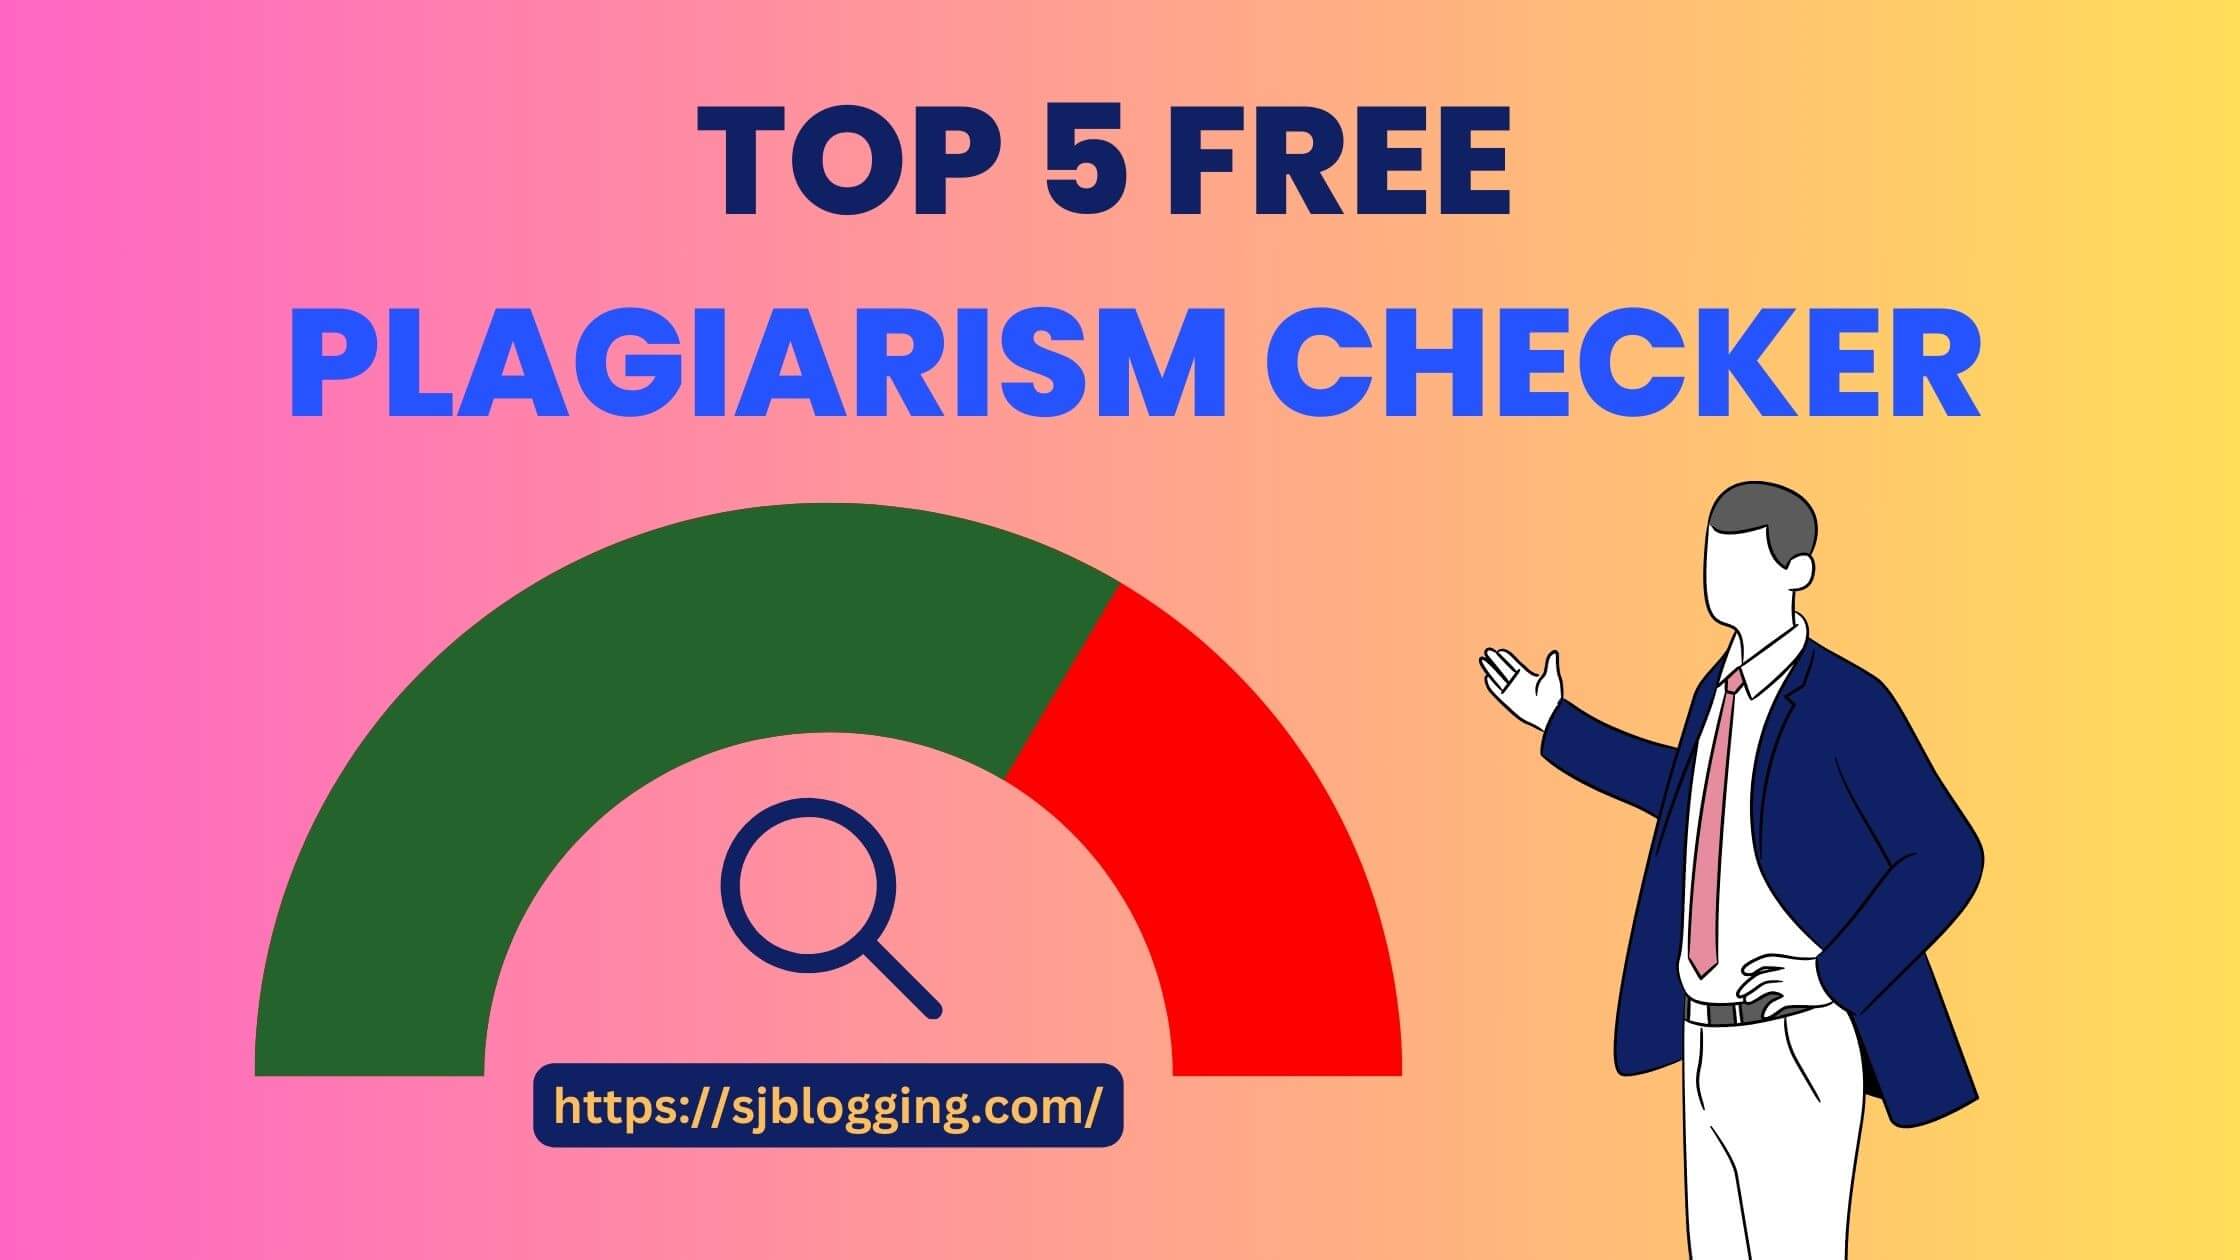 List of Free Best Plagiarism Checker